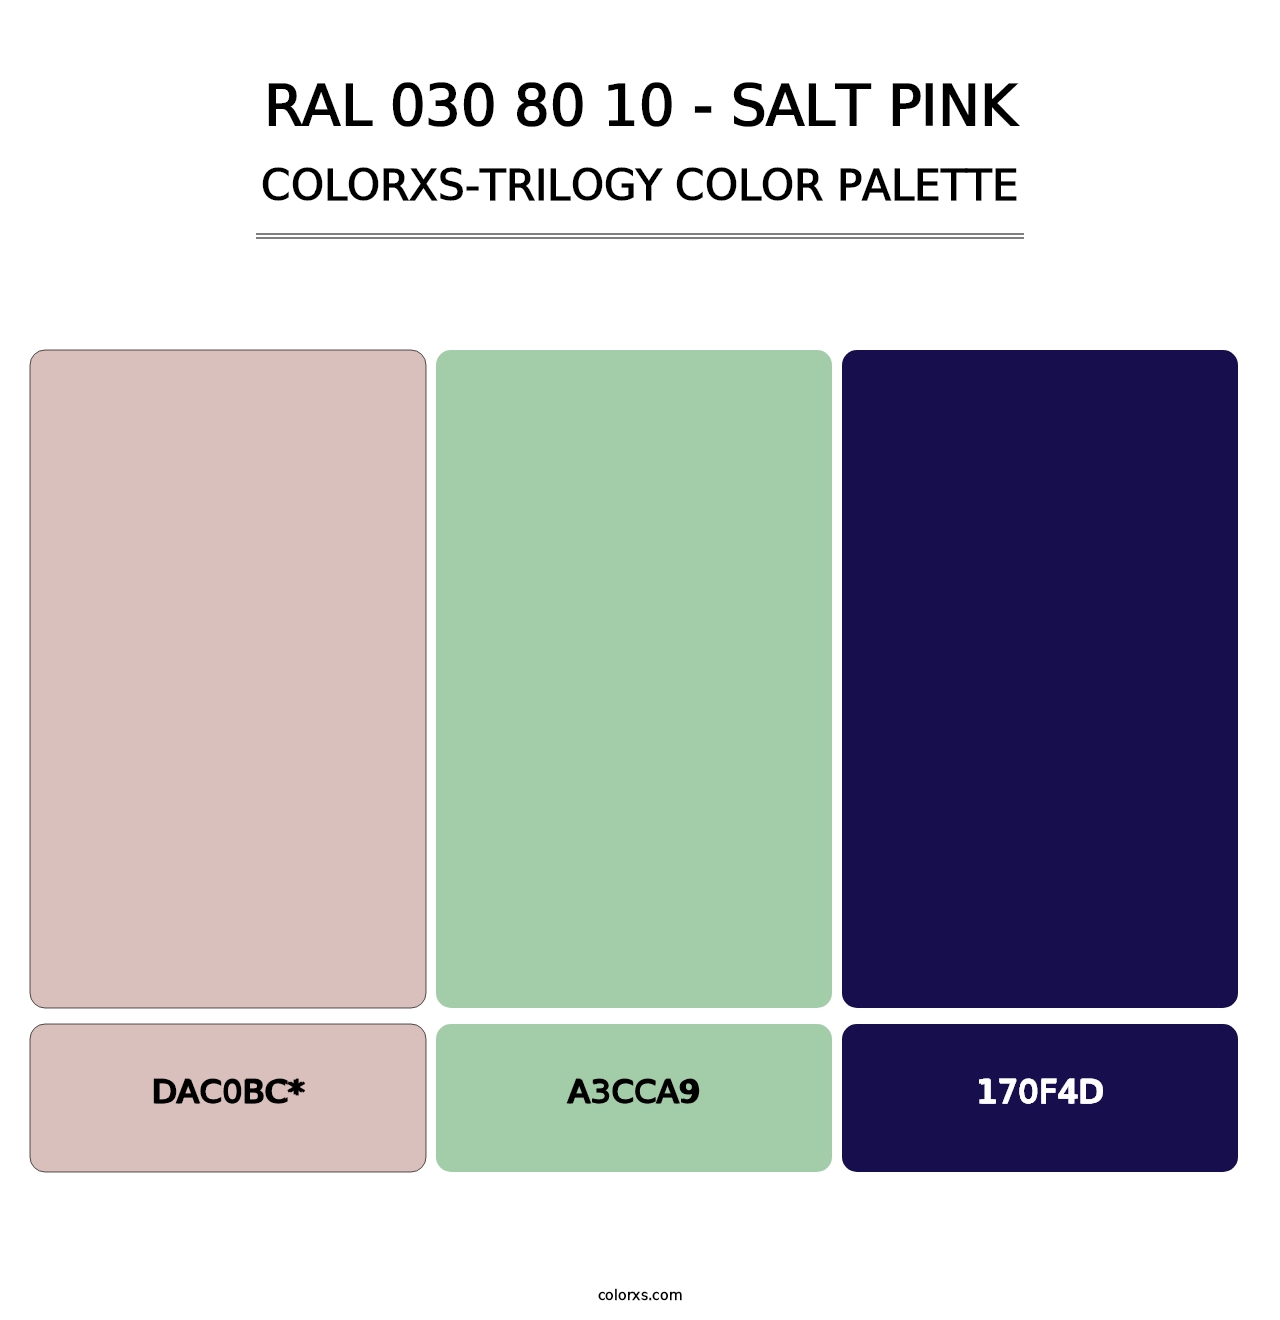 RAL 030 80 10 - Salt Pink - Colorxs Trilogy Palette